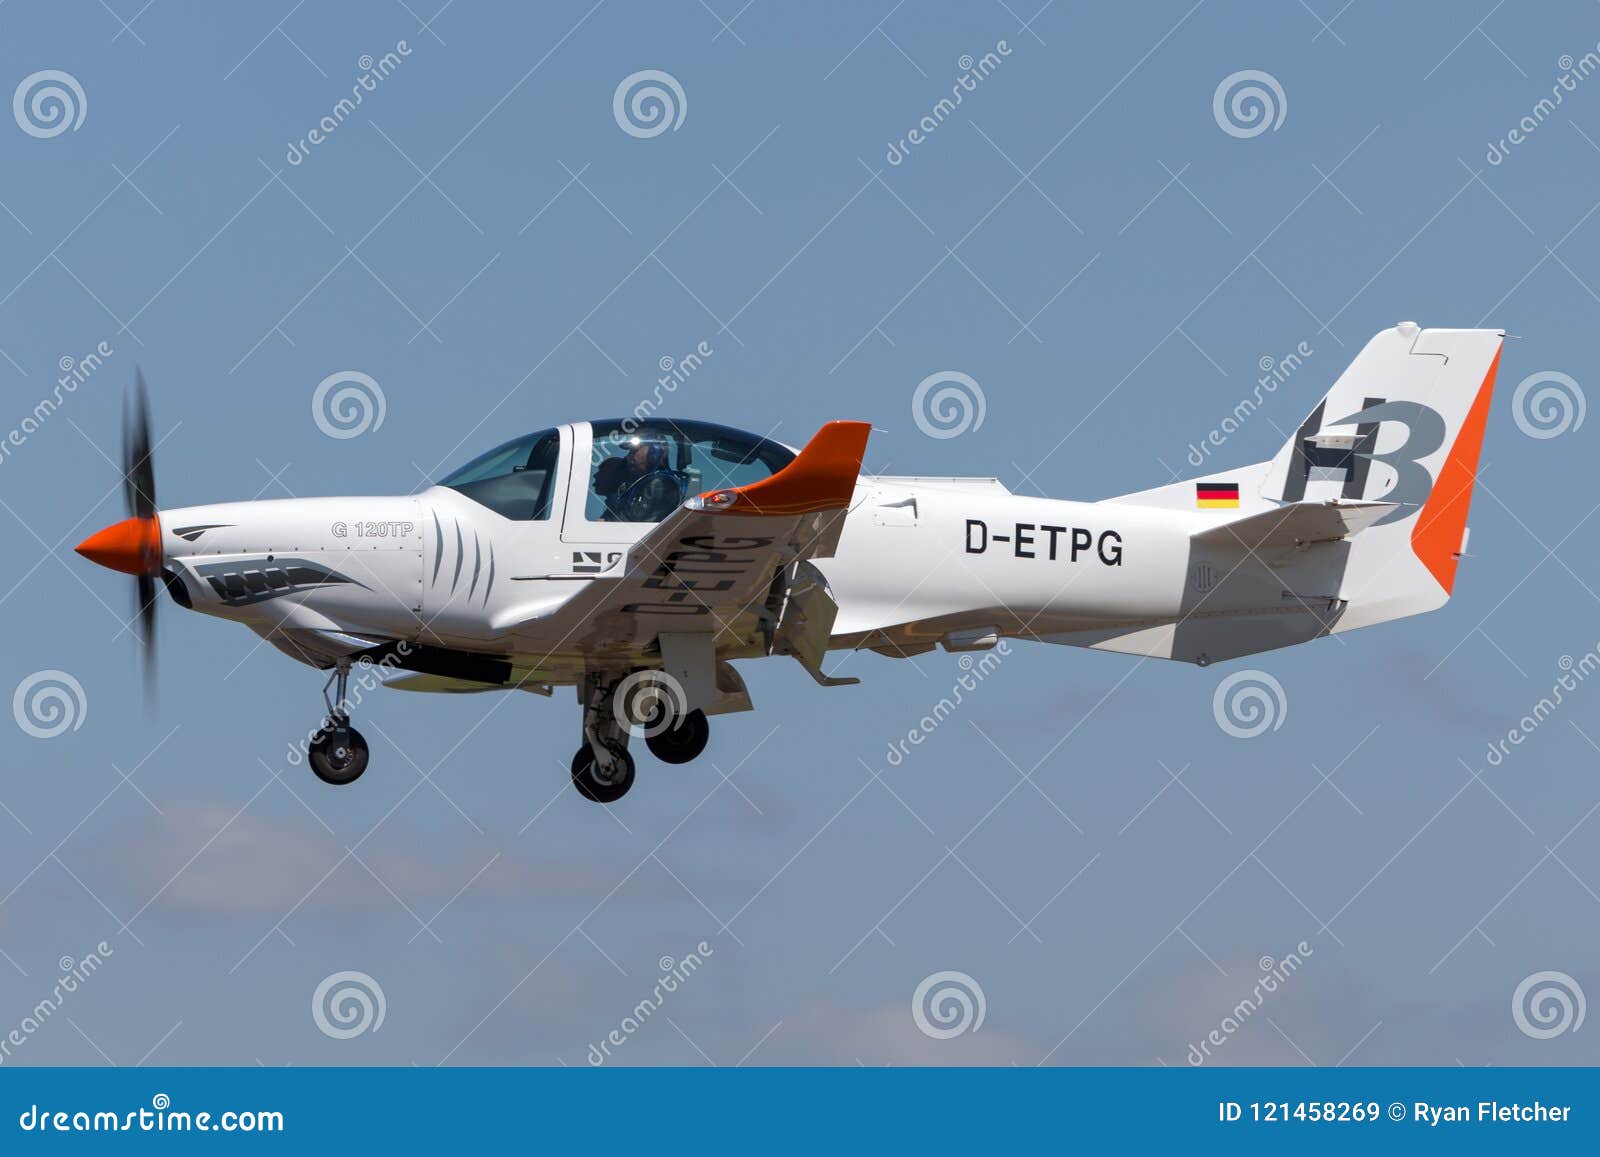 Grob Aerospace G-120Tp Training Aircraft D-Etpg. Editorial Stock Image -  Image Of Pilot, Flight: 121458269